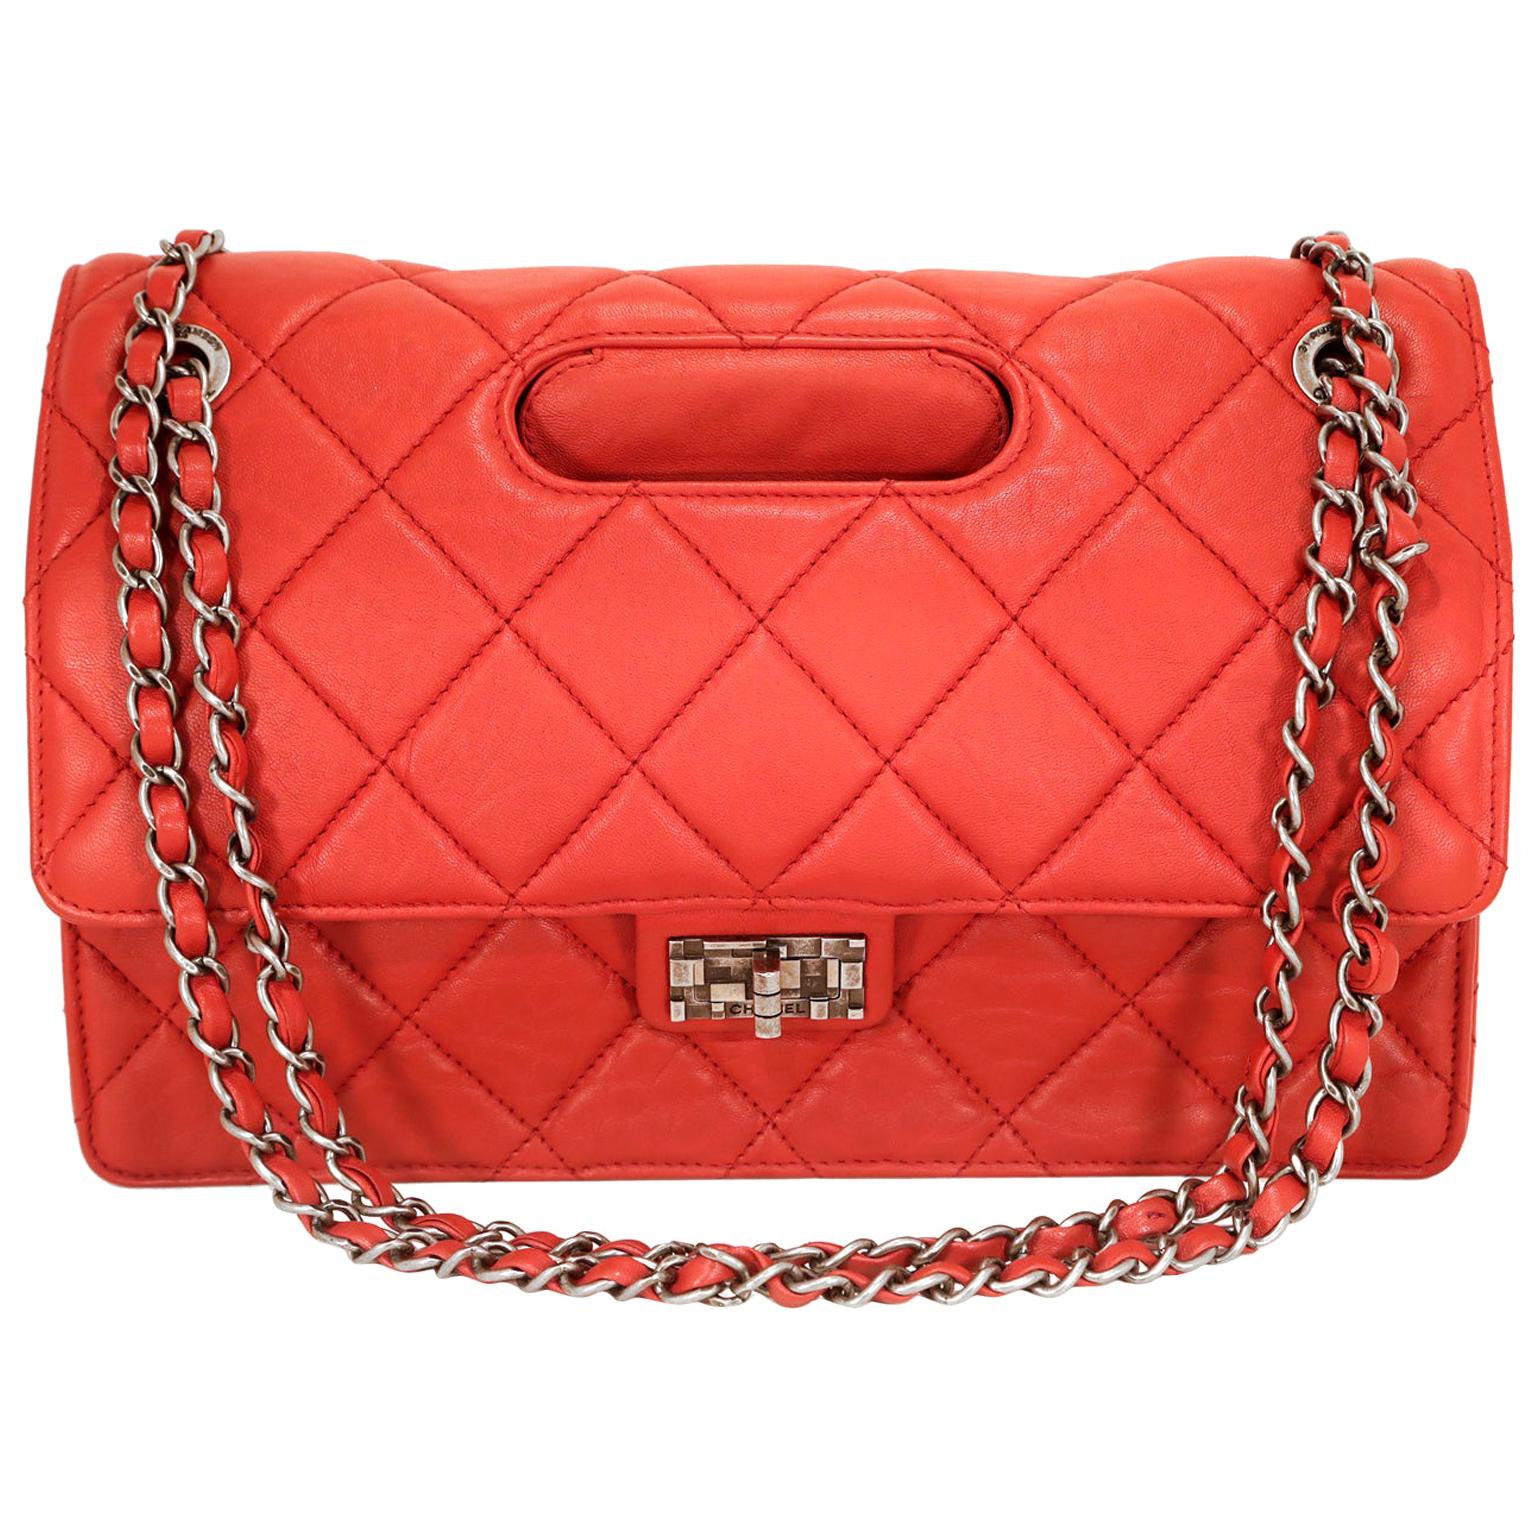 Chanel Red Lambskin Paris Byzance Takeaway Flap Bag